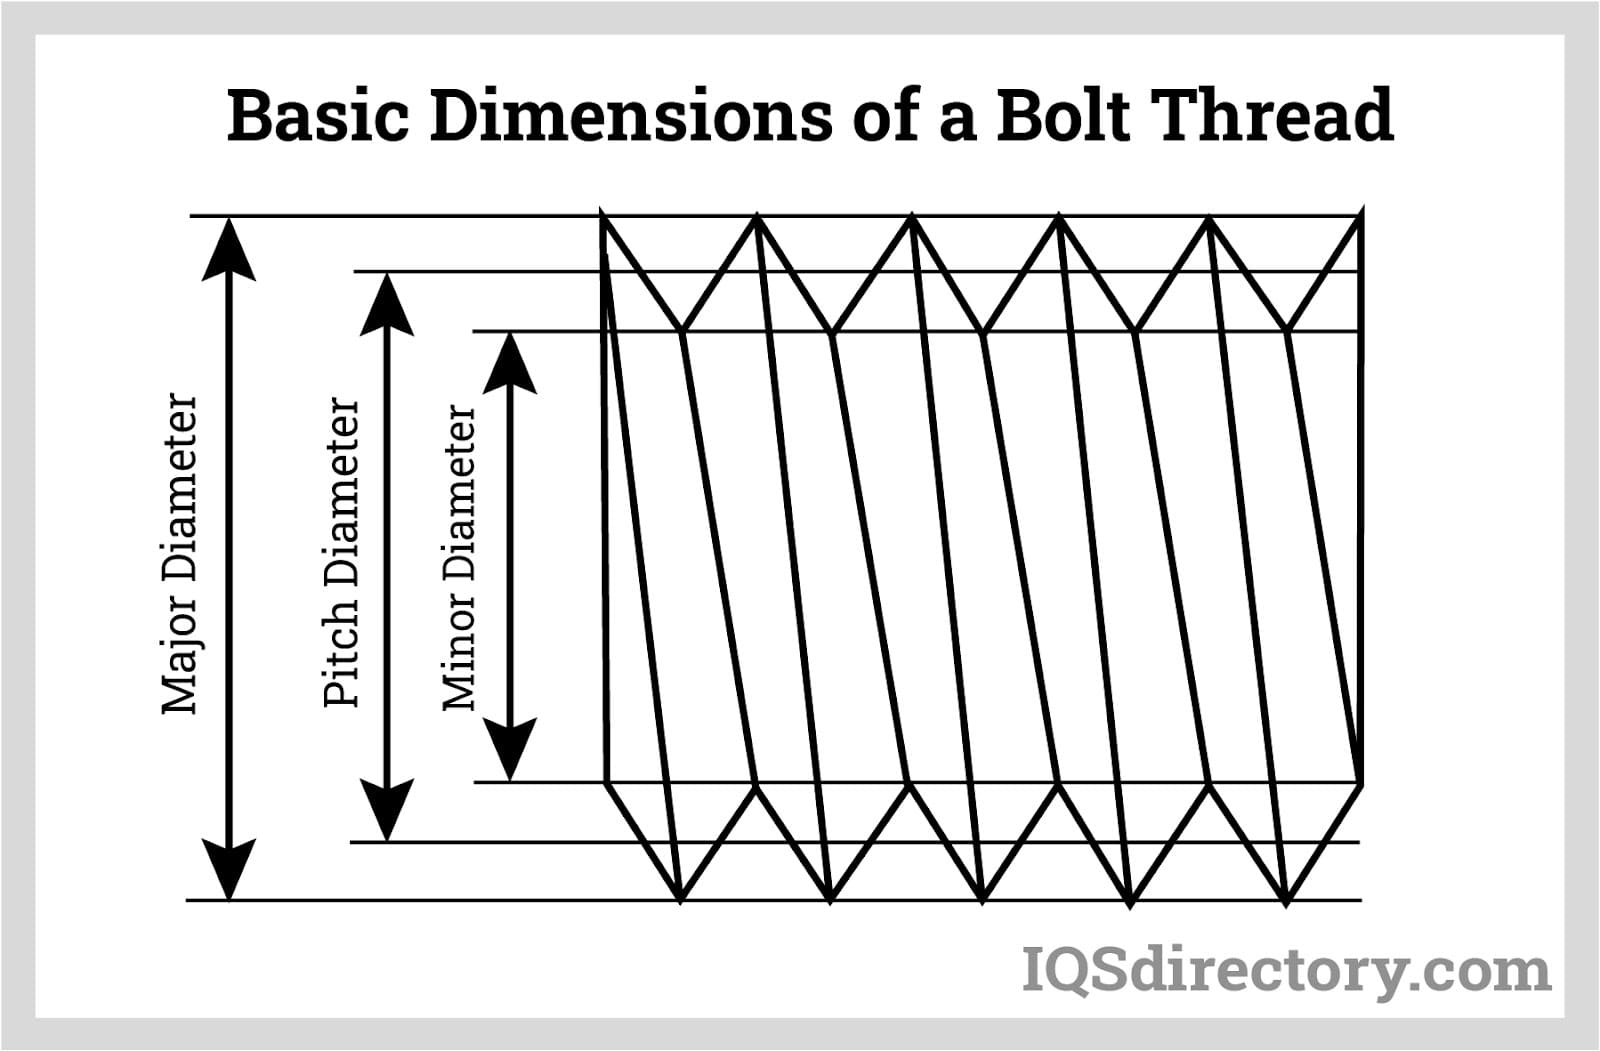 Basic Dimensions of a Bolt Thread